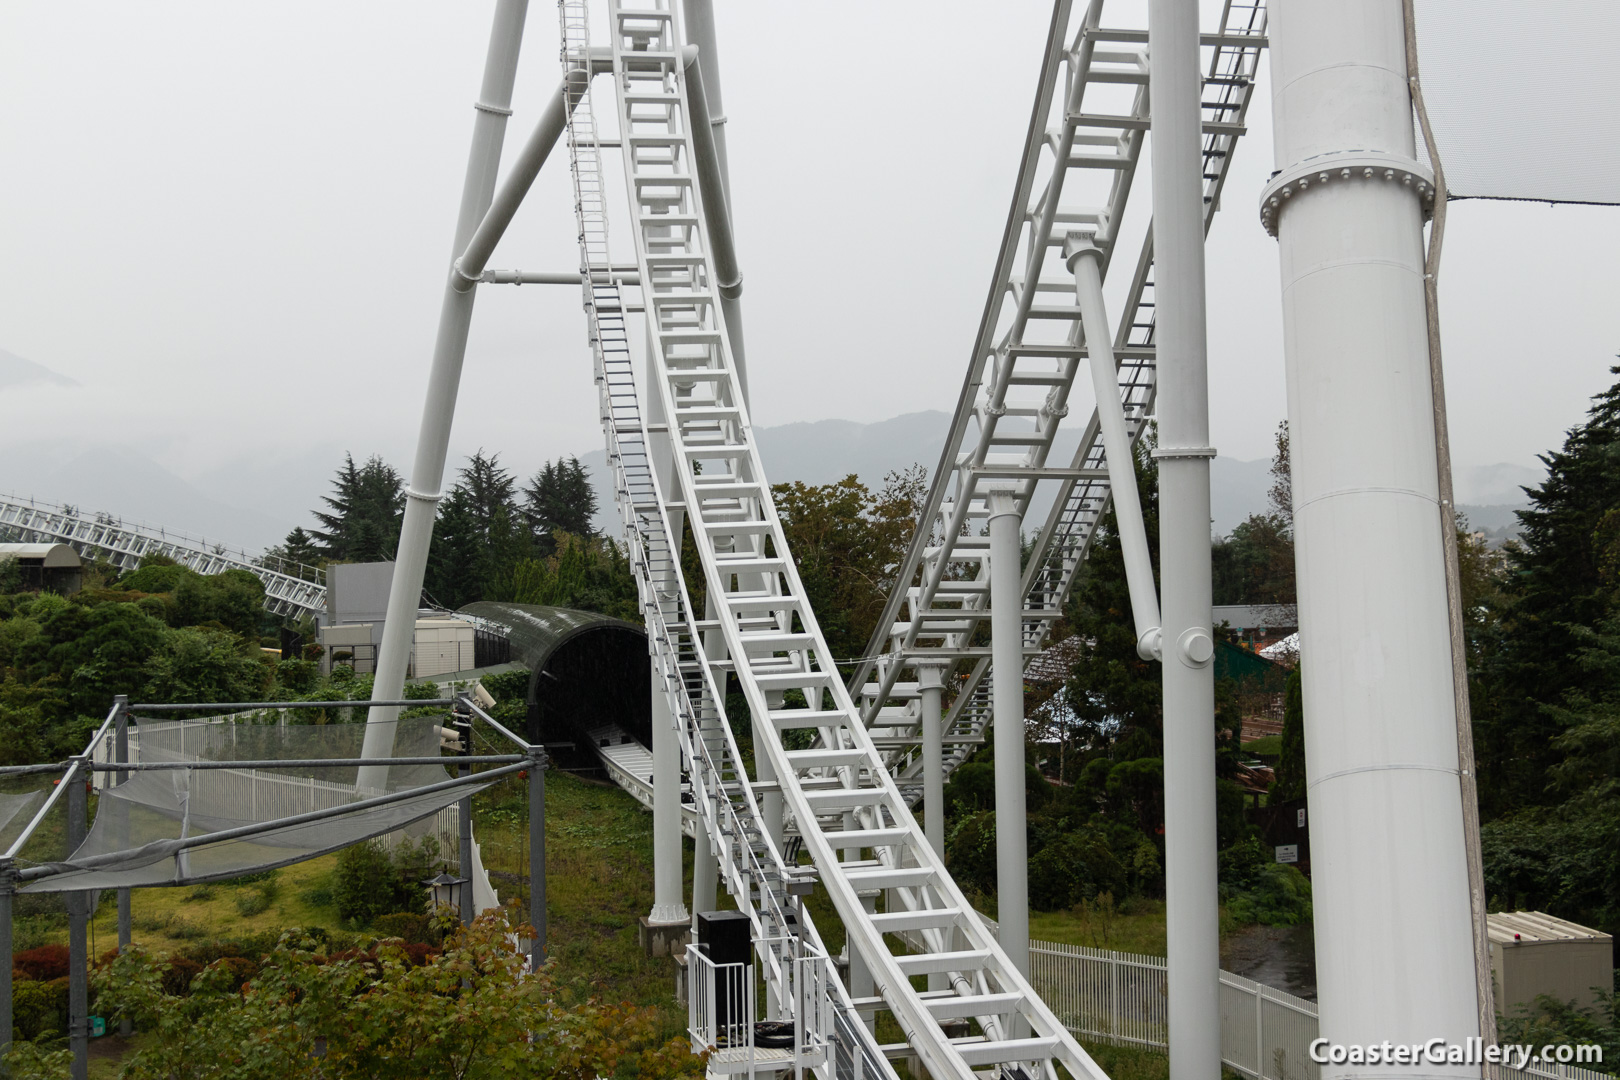 People have reported breaking bones on the Dodonpa roller coaster